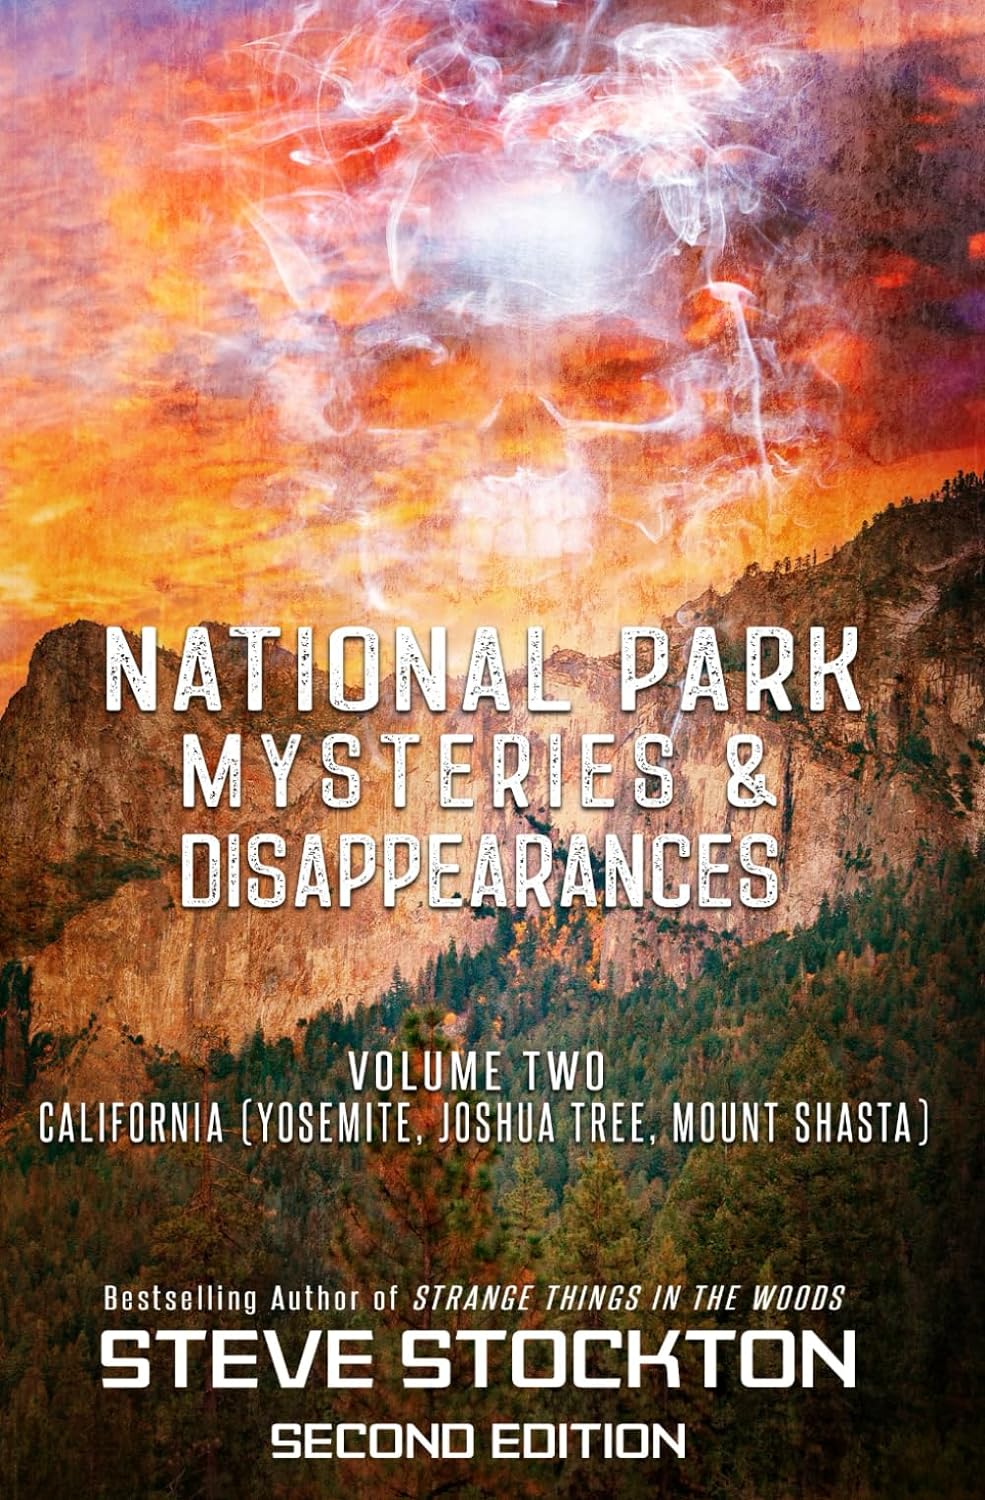 National Park Mysteries Disappearances: California (Yosemite, Joshua Tree, Mount Shasta) Paperback – August 13, 2021